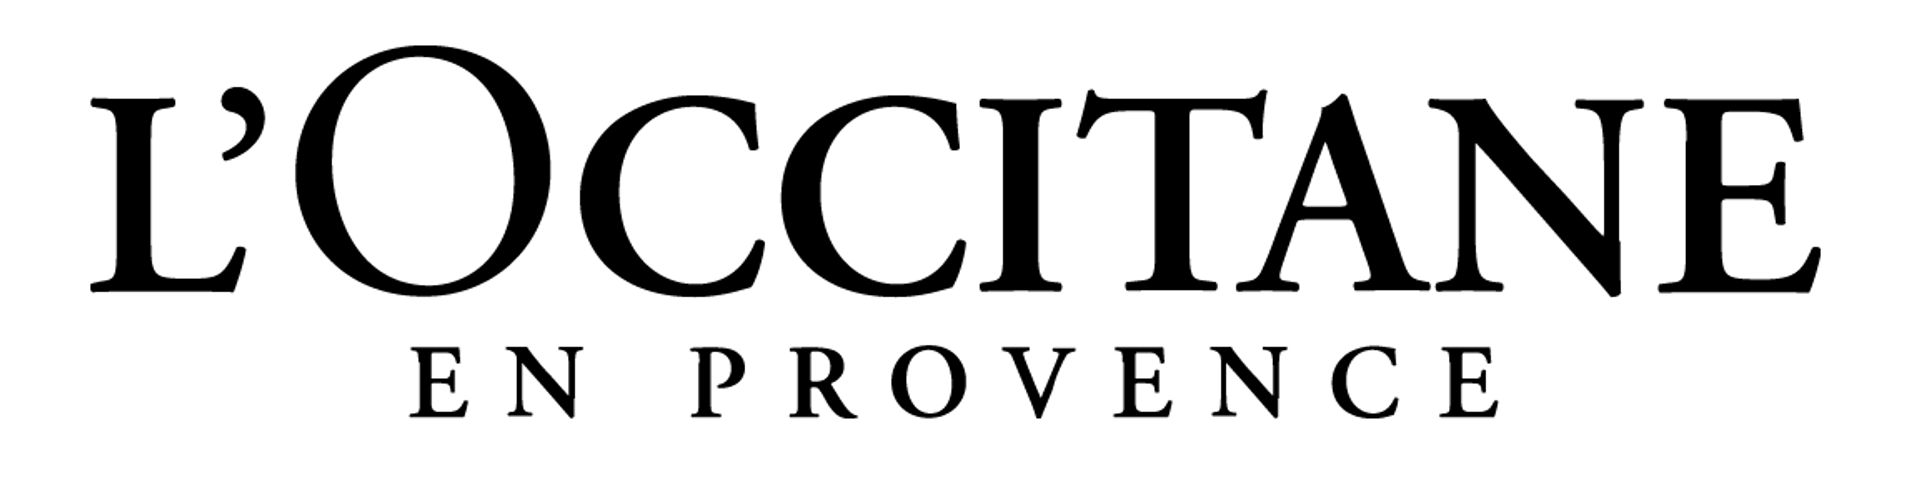 L'OCCITANE logo de circulaires